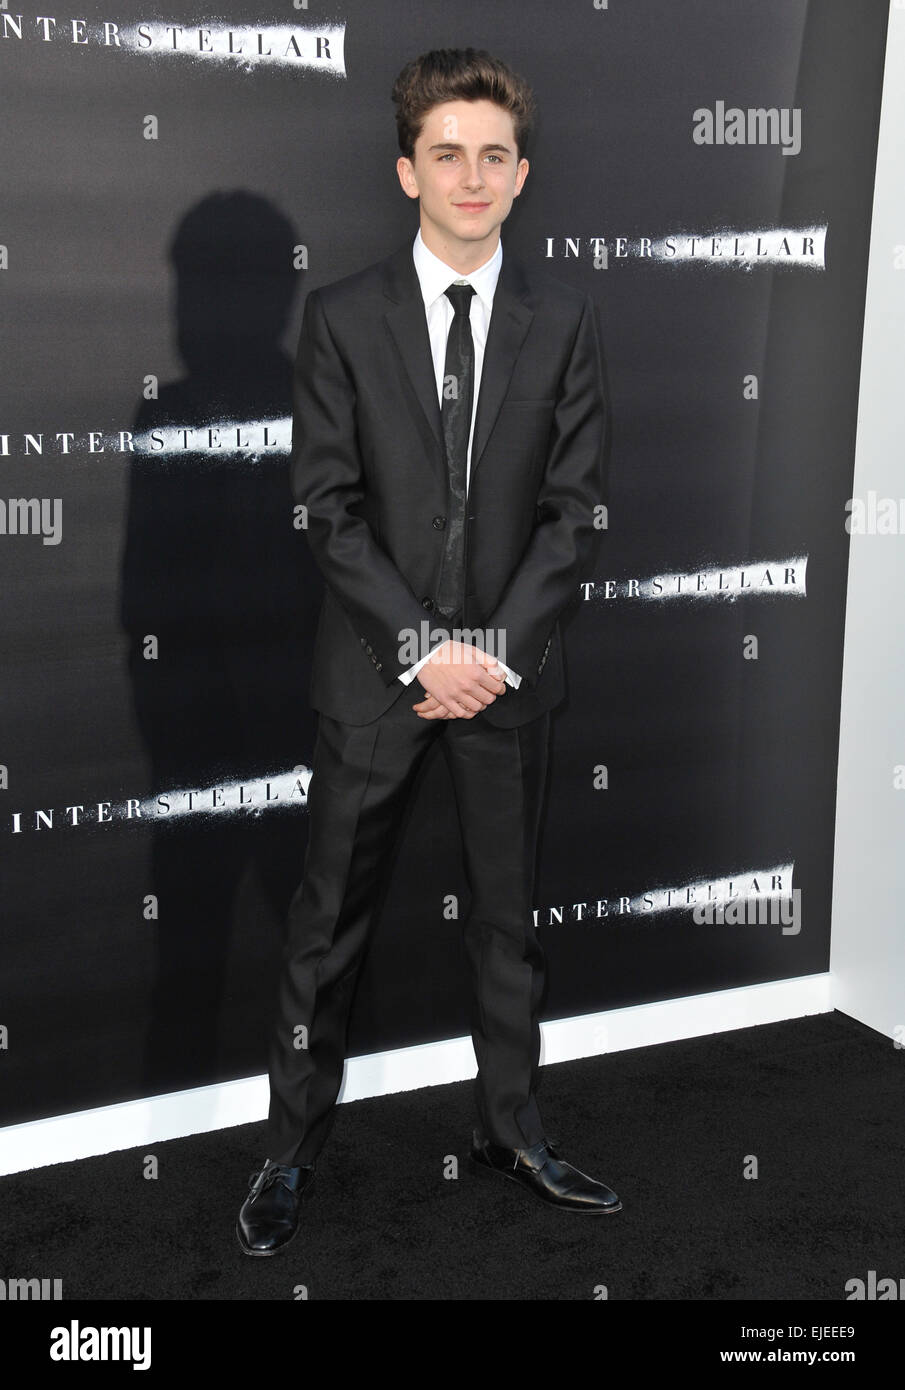 LOS ANGELES, CA - Ottobre 26, 2014: Timothee Chalamet presso il Los Angeles premiere del suo film a interstellare la leva TCL Chinese Theatre, Hollywood. Foto Stock